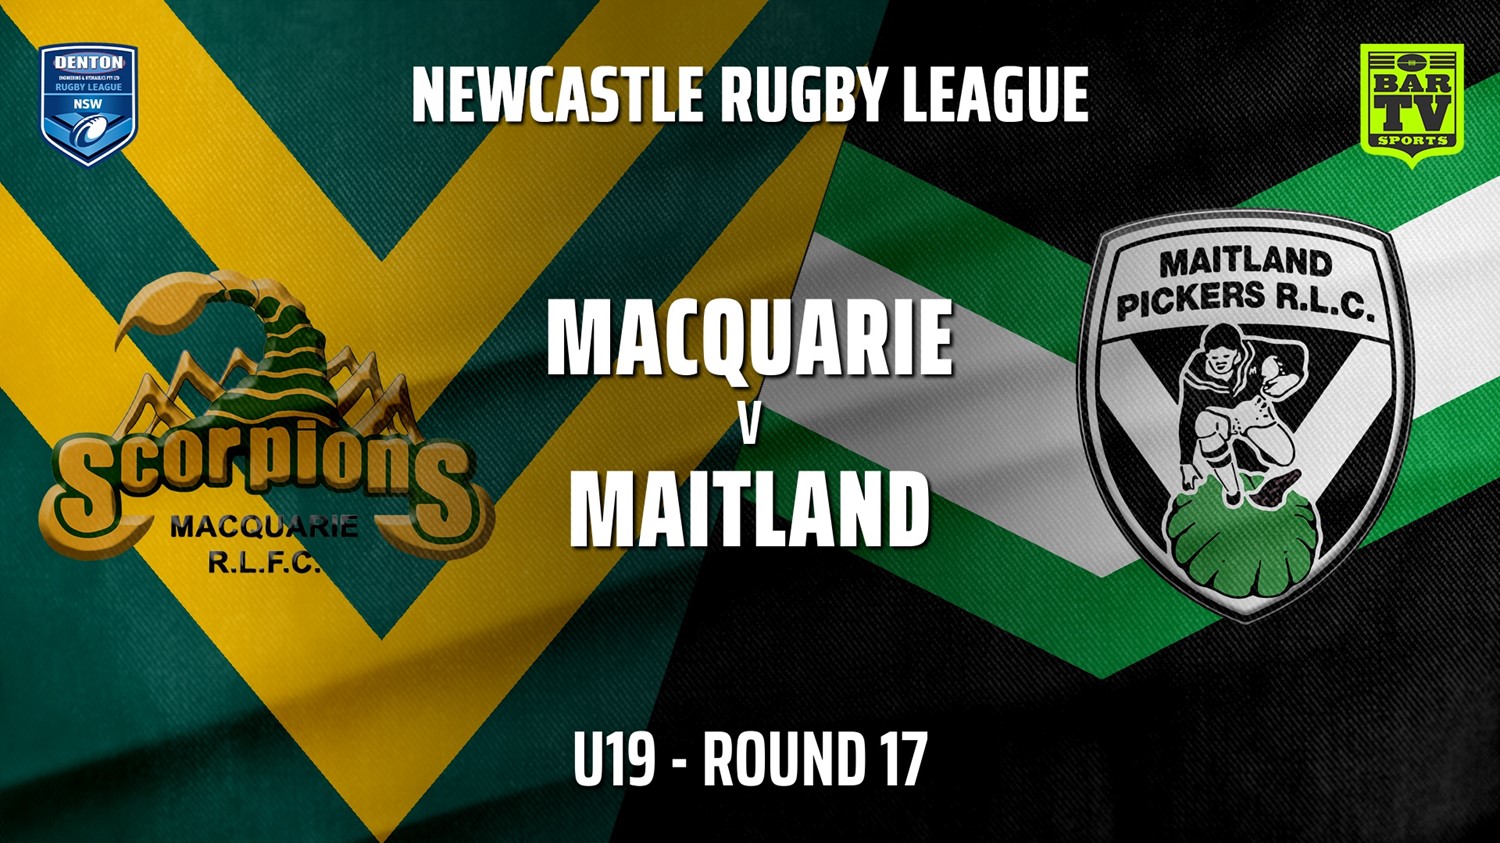 210731-Newcastle Round 17 - U19 - Macquarie Scorpions v Maitland Pickers Slate Image